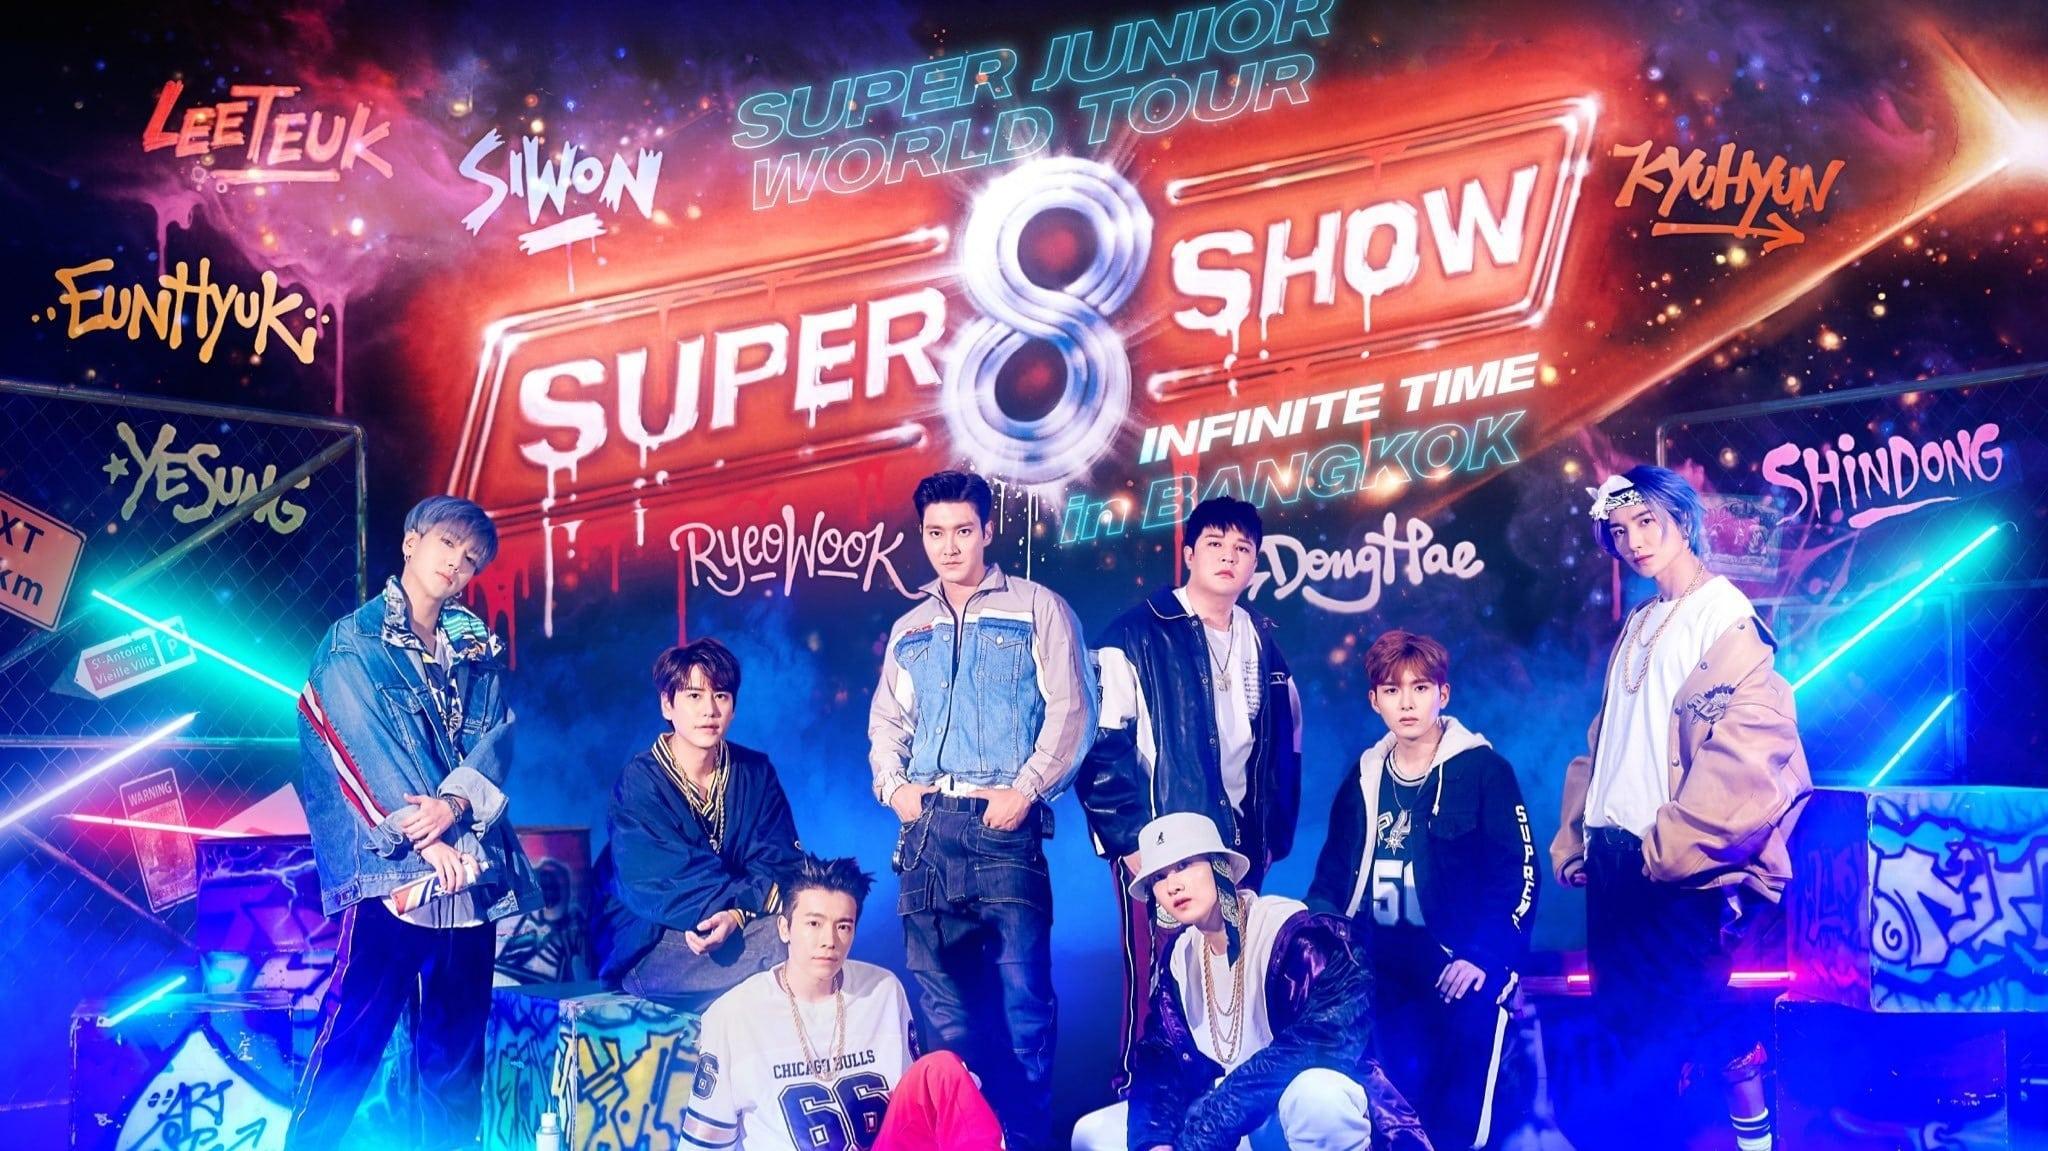 Super Junior World Tour "SUPER SHOW 8: INFINITE TIME" backdrop